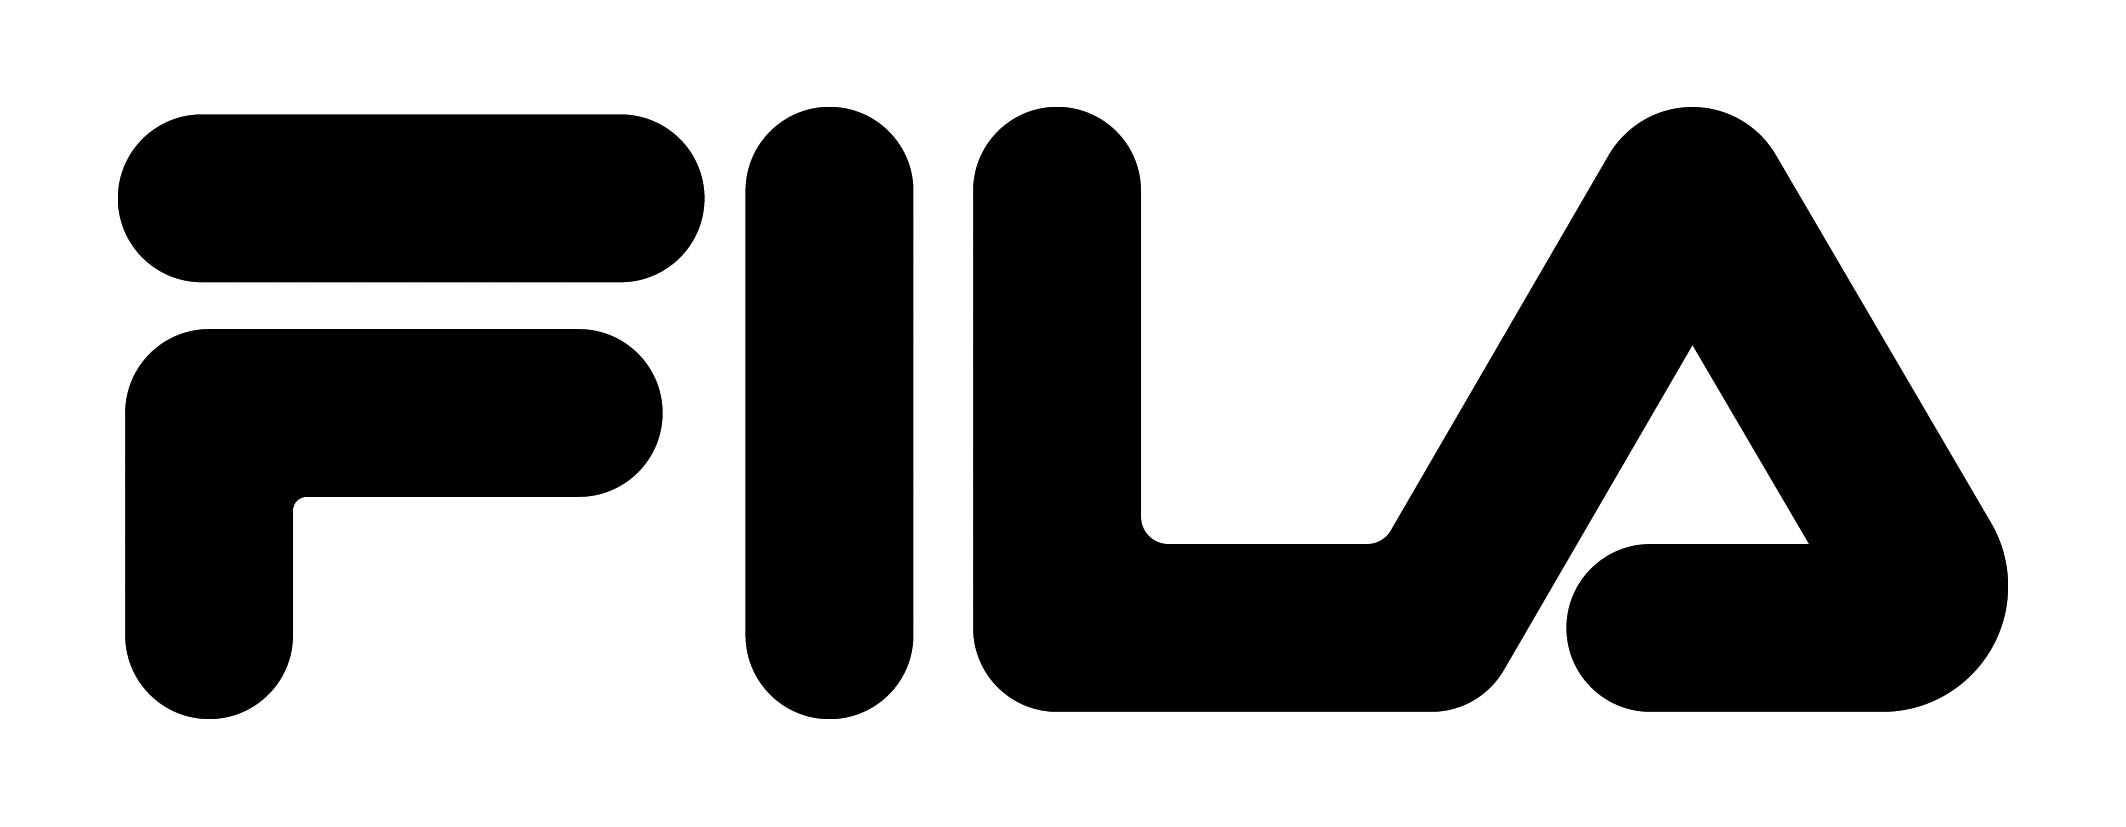 логотип Fila